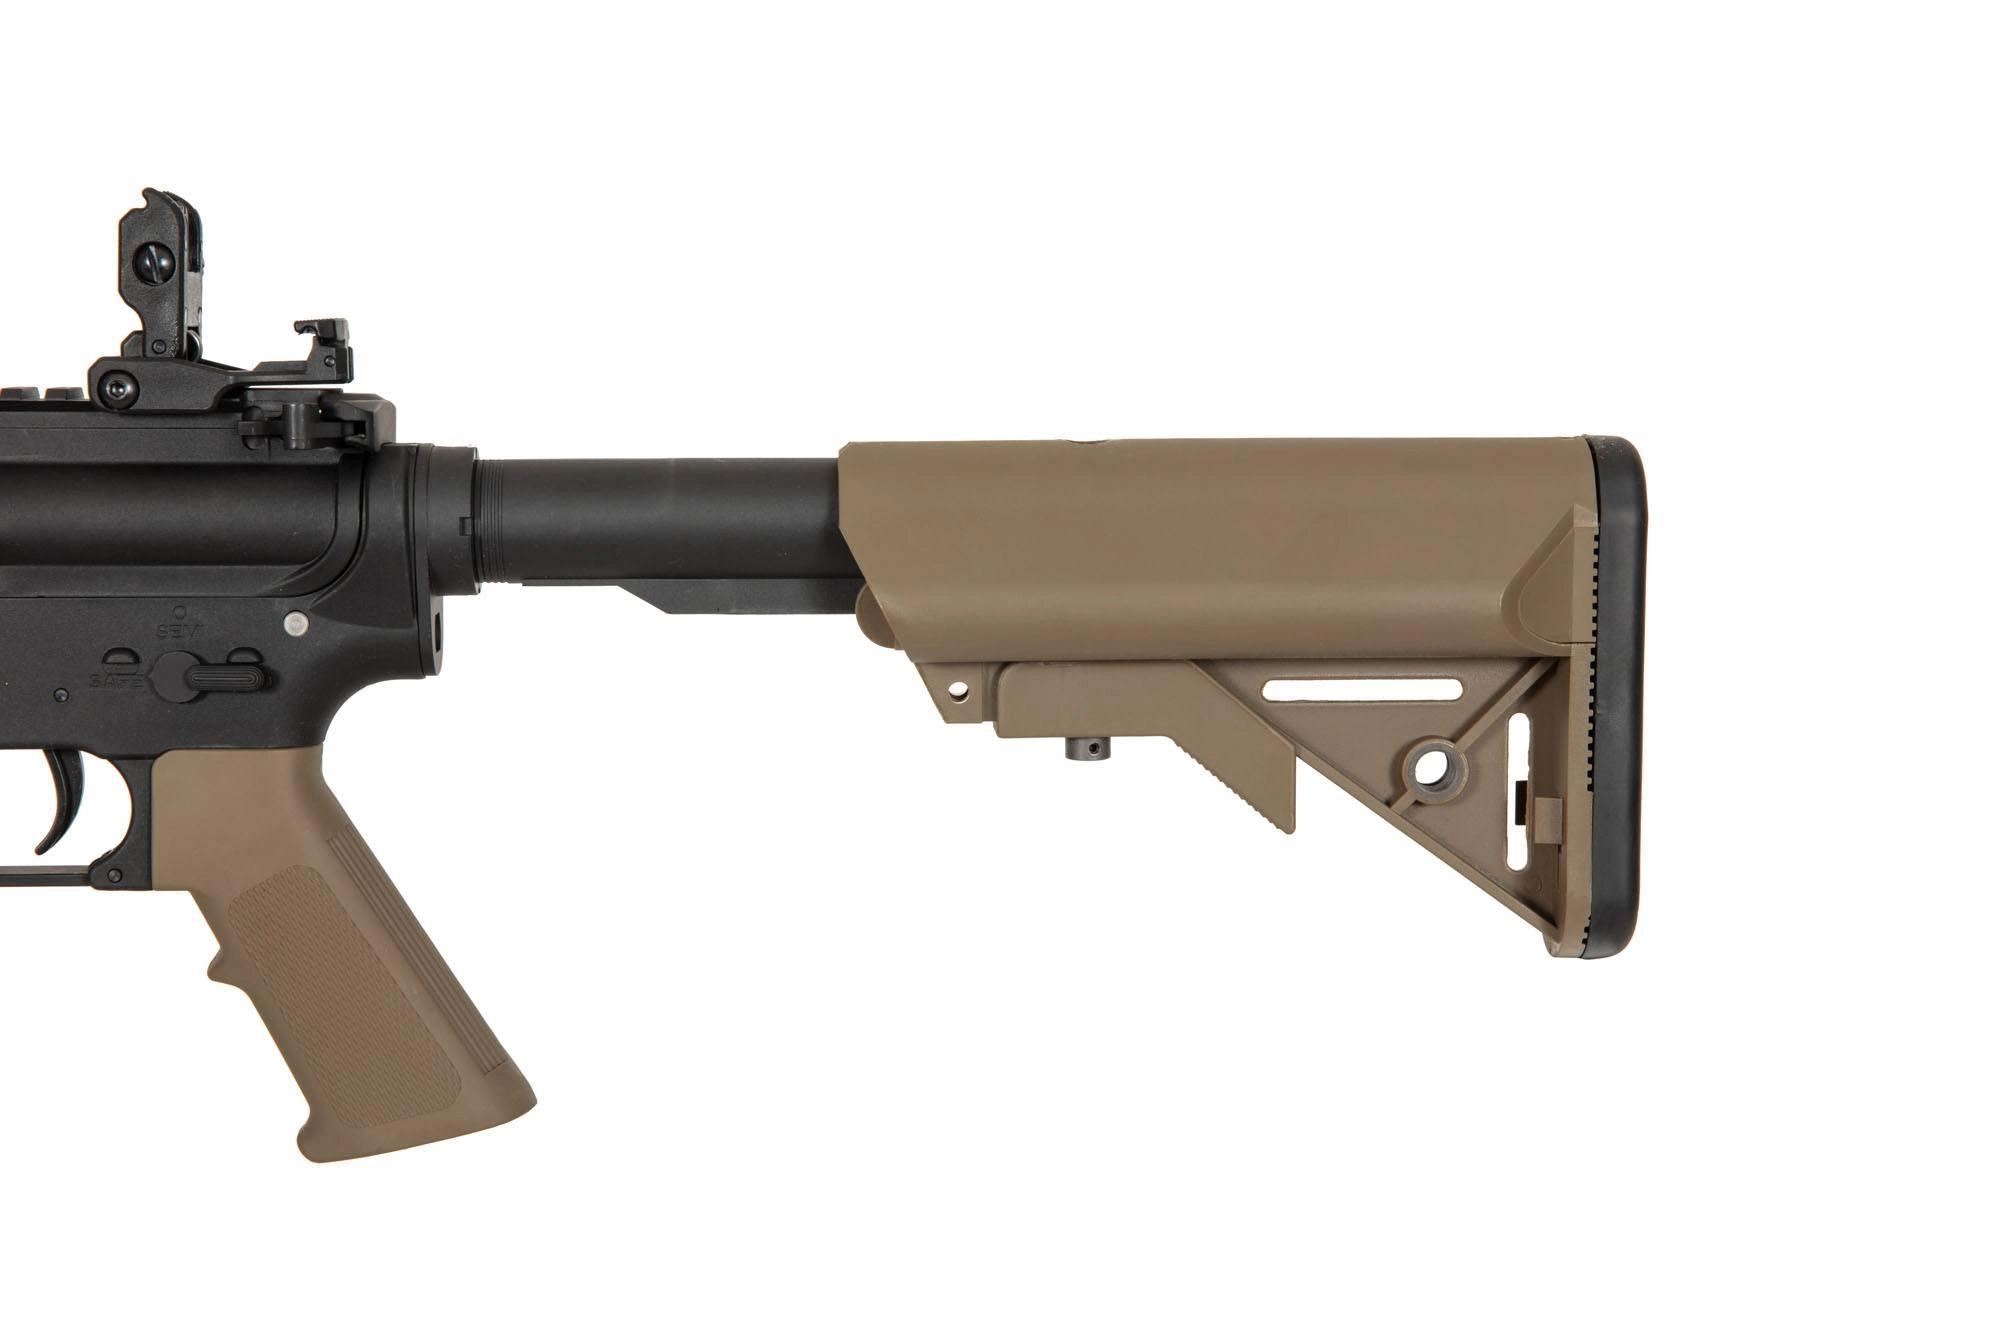 Specna Arms SA-C22 CORE sähköase - Chaos Bronze